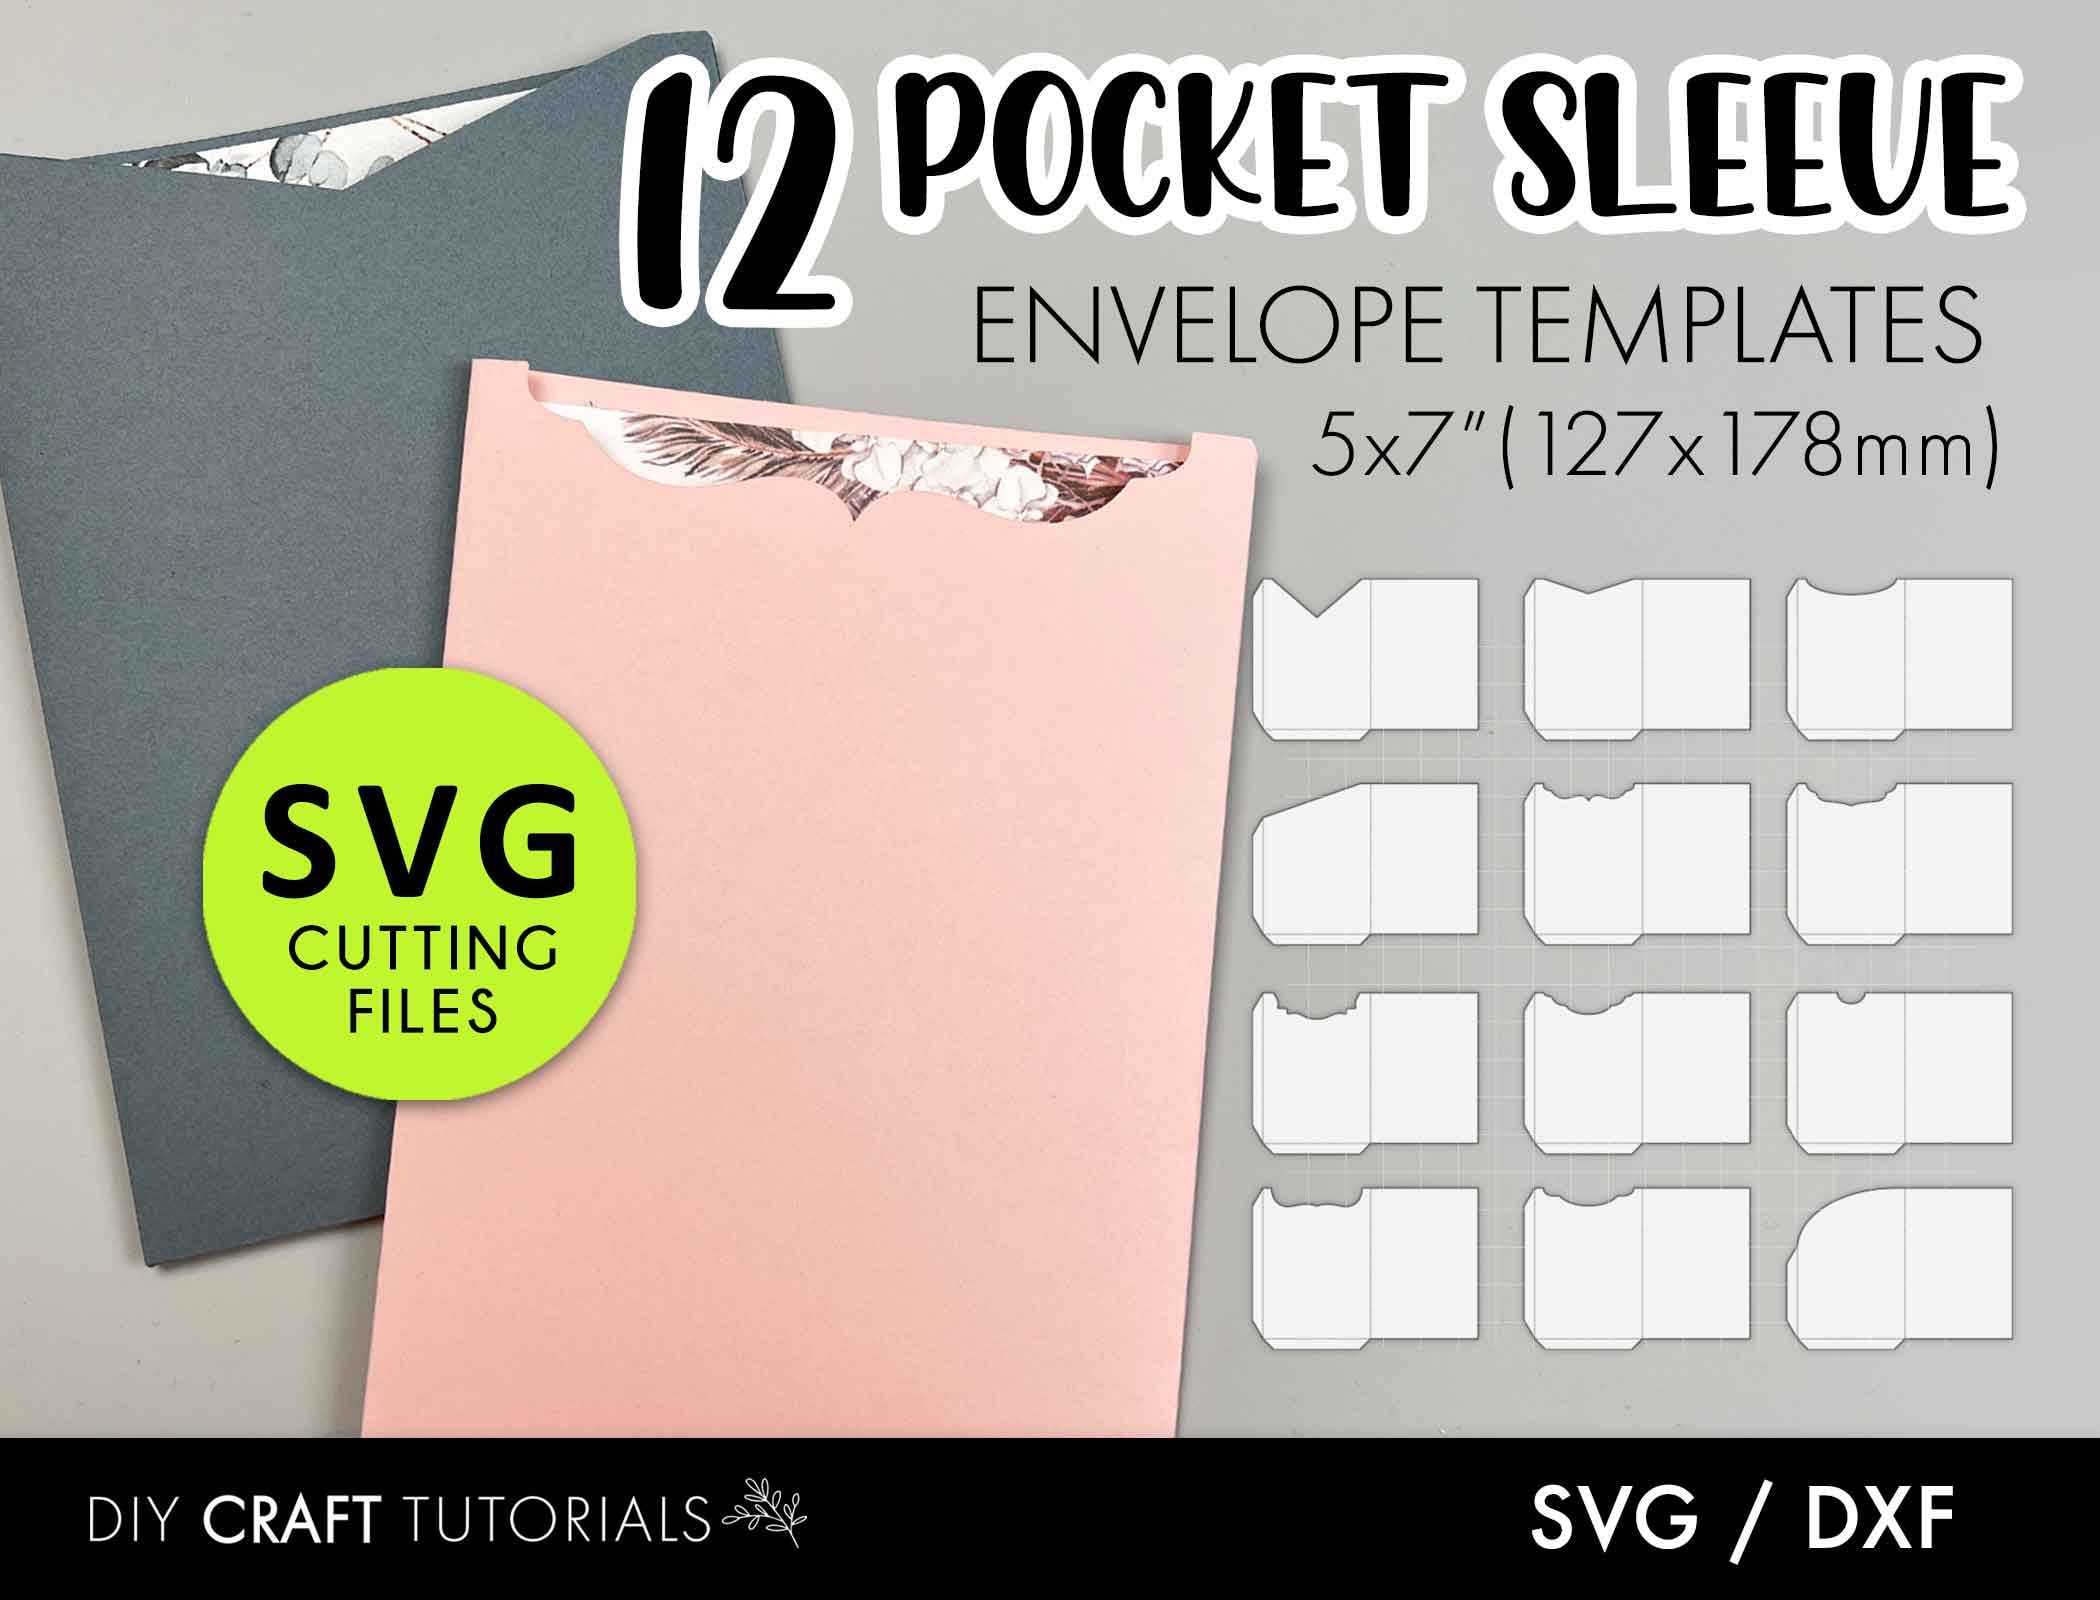 Invitation Size Guide  5x7 PocketFrame - Cards & Pockets